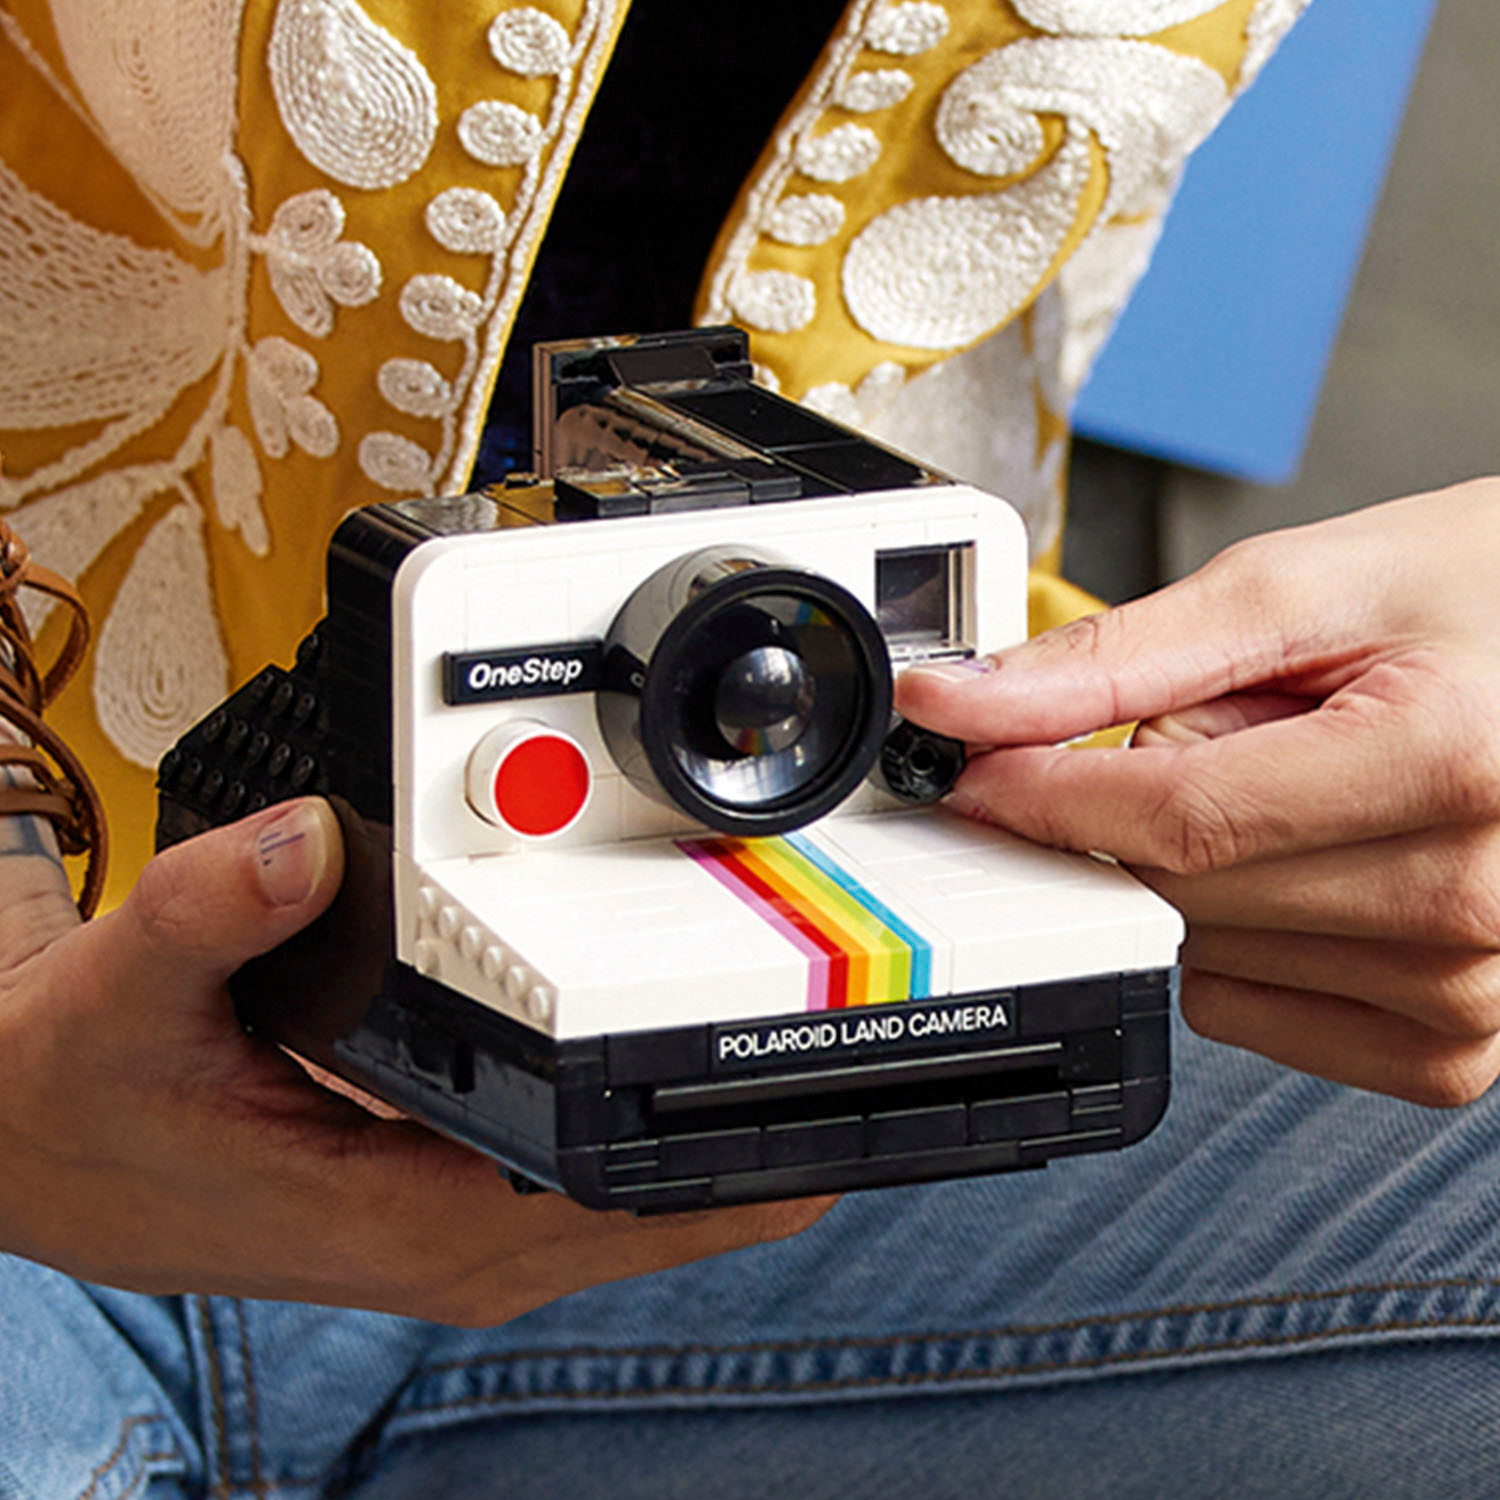 LEGO - LEGO® Ideas 21345 Polaroid OneStep SX-70 camera playset